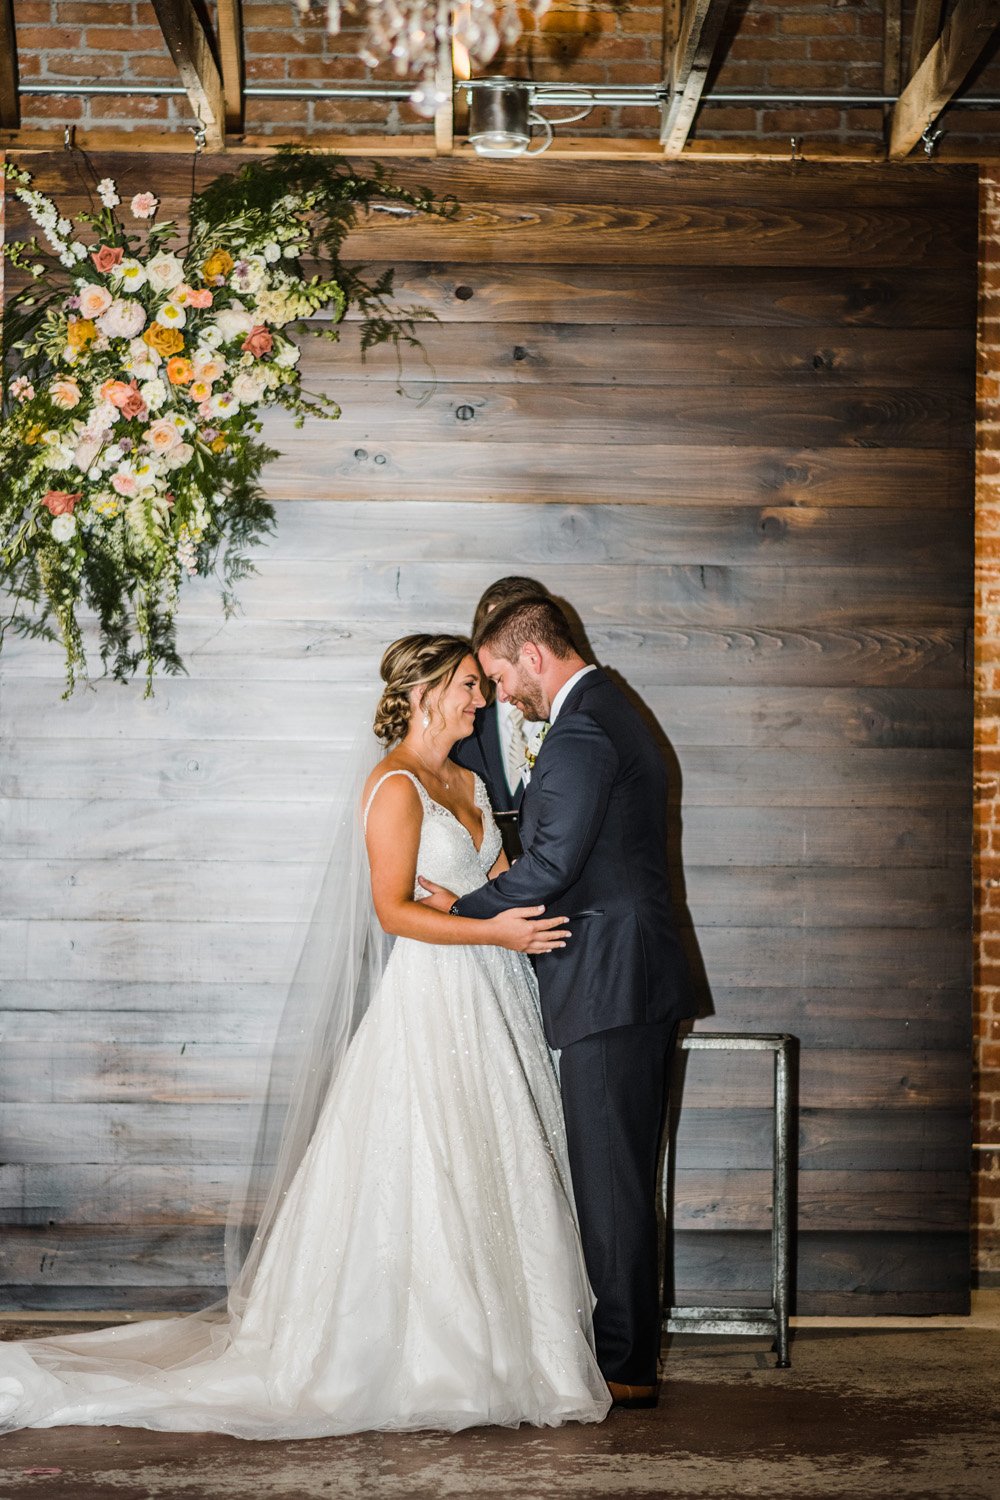 Plume&Furrow-Wedding-Florist-Morgan&Colby-theStVrain-June-Colorado-Function+FlourishPhoto-ceremony-bride-groom-moment-flowers-arbor.jpg